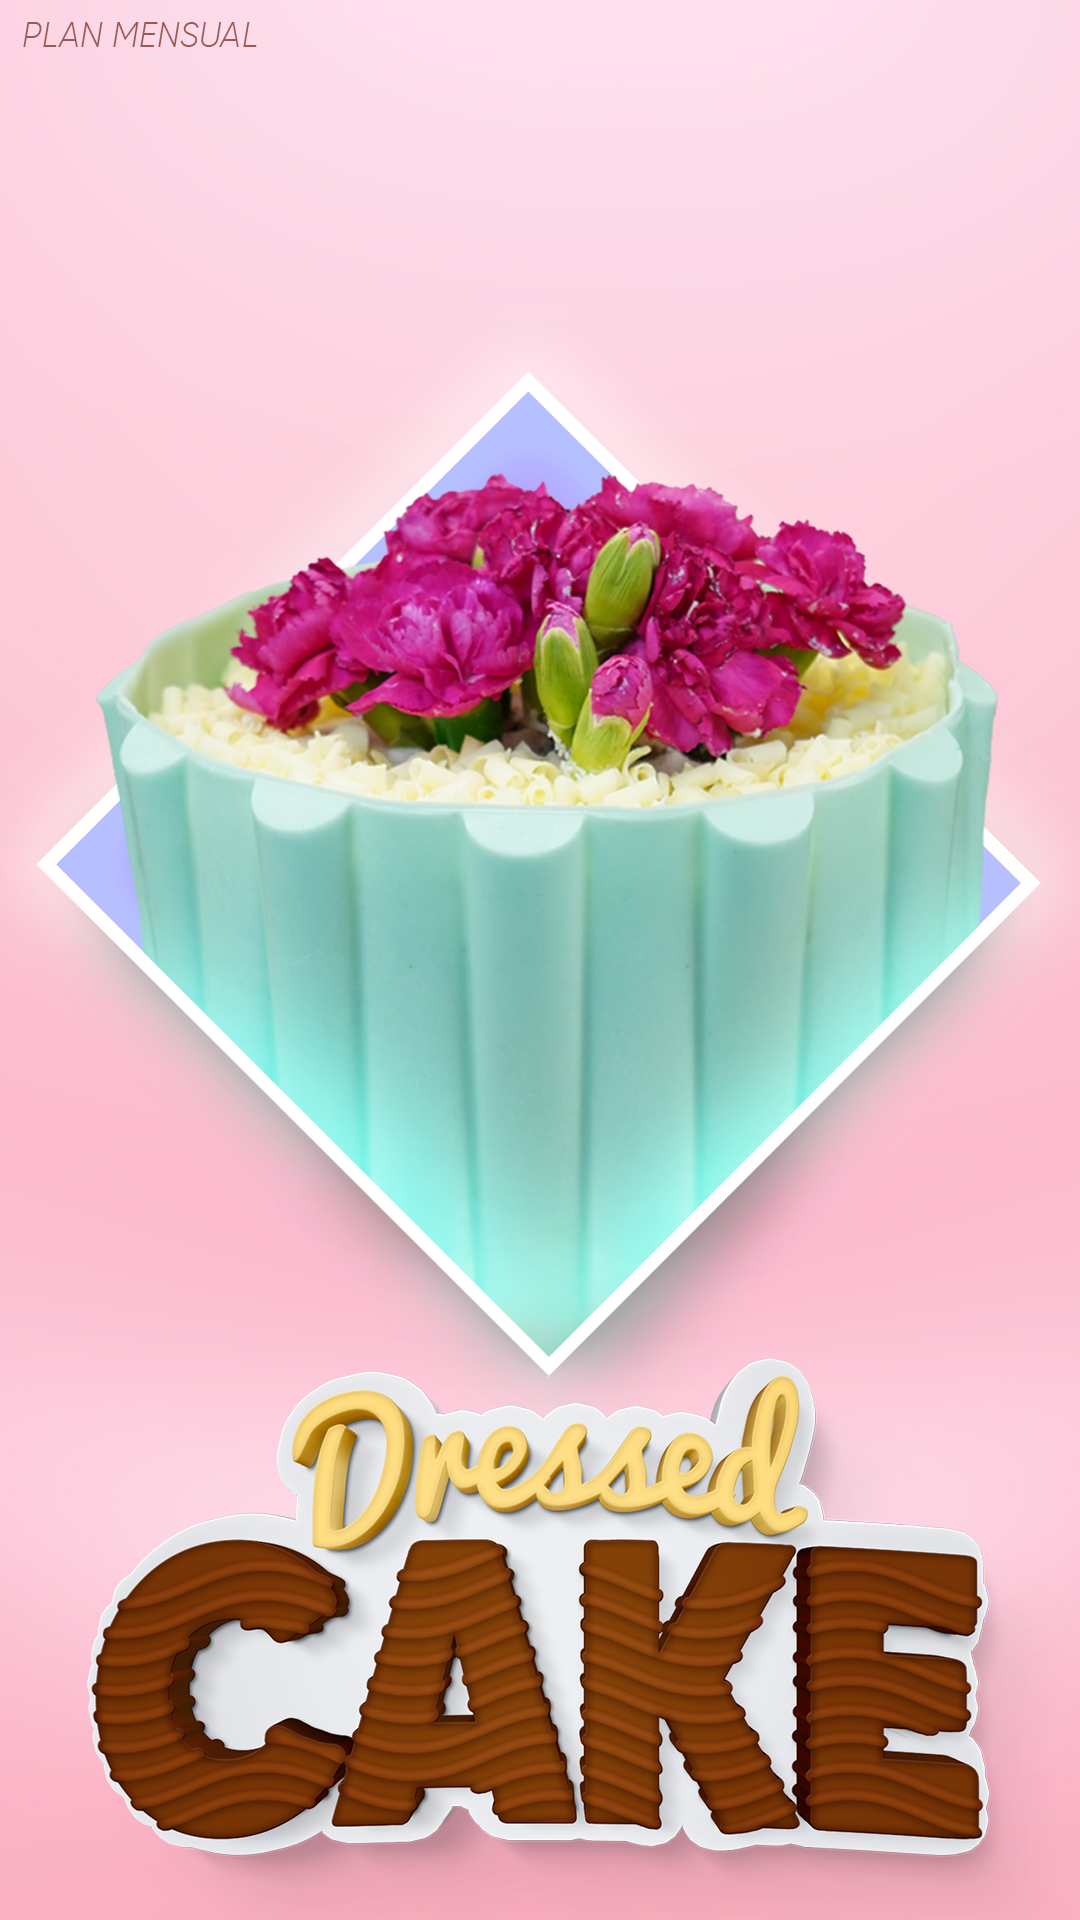 THUMB - DRESSED CAKE